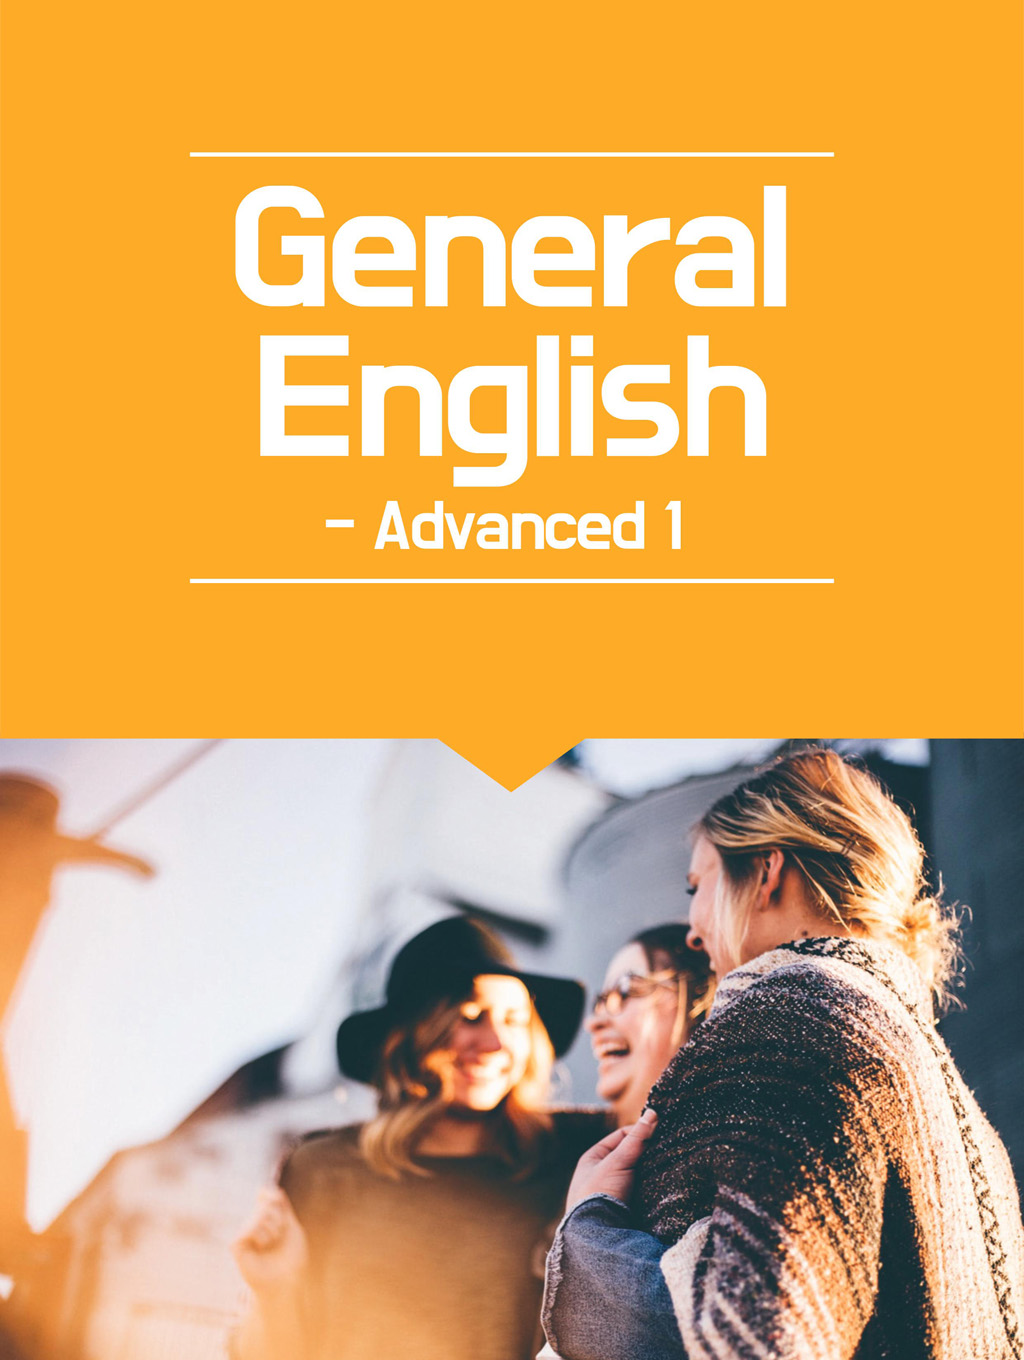 General English - Advanced 1